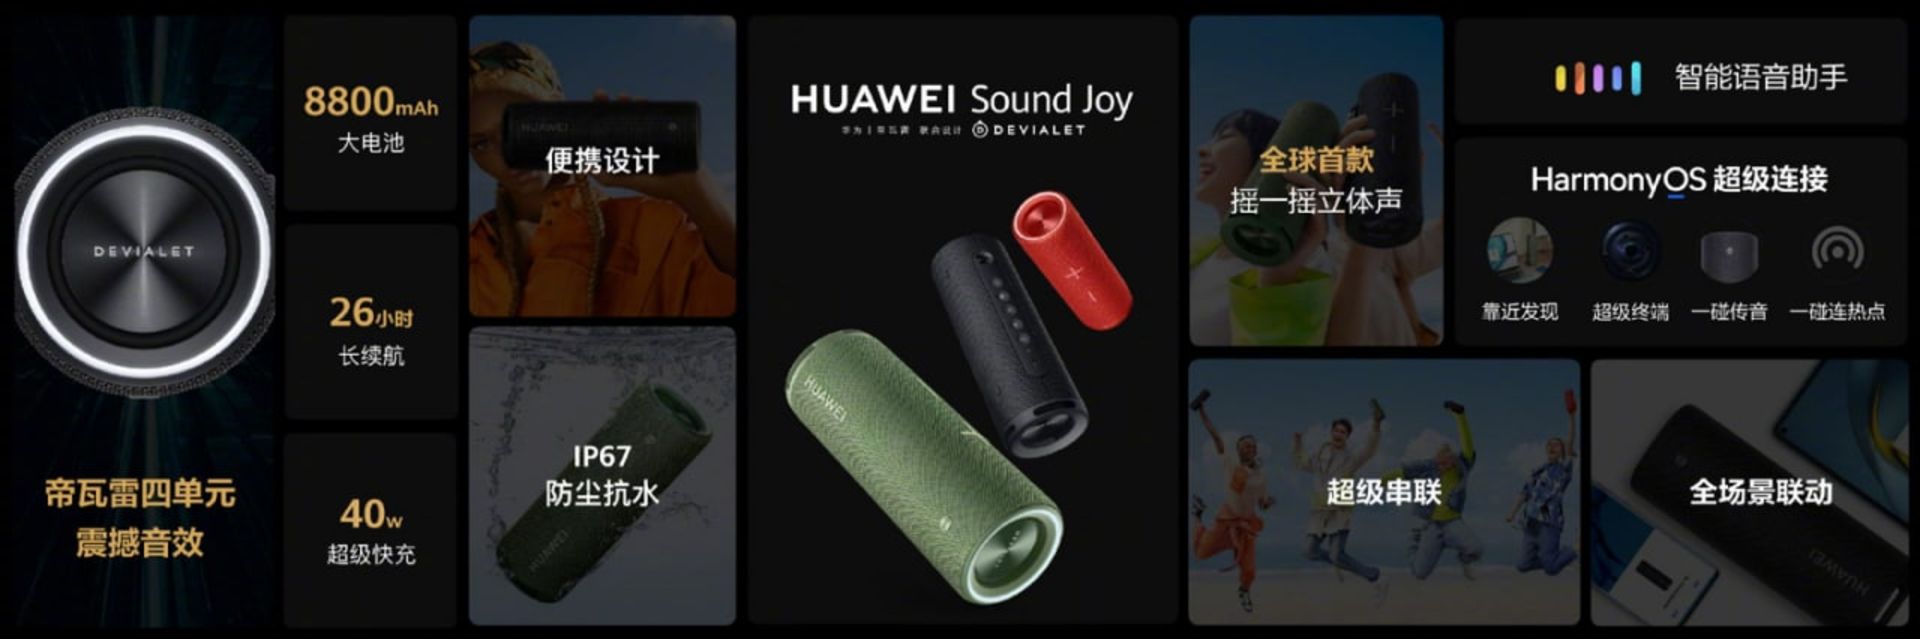 اسپیکر هوشمند هواوی Sound Joy